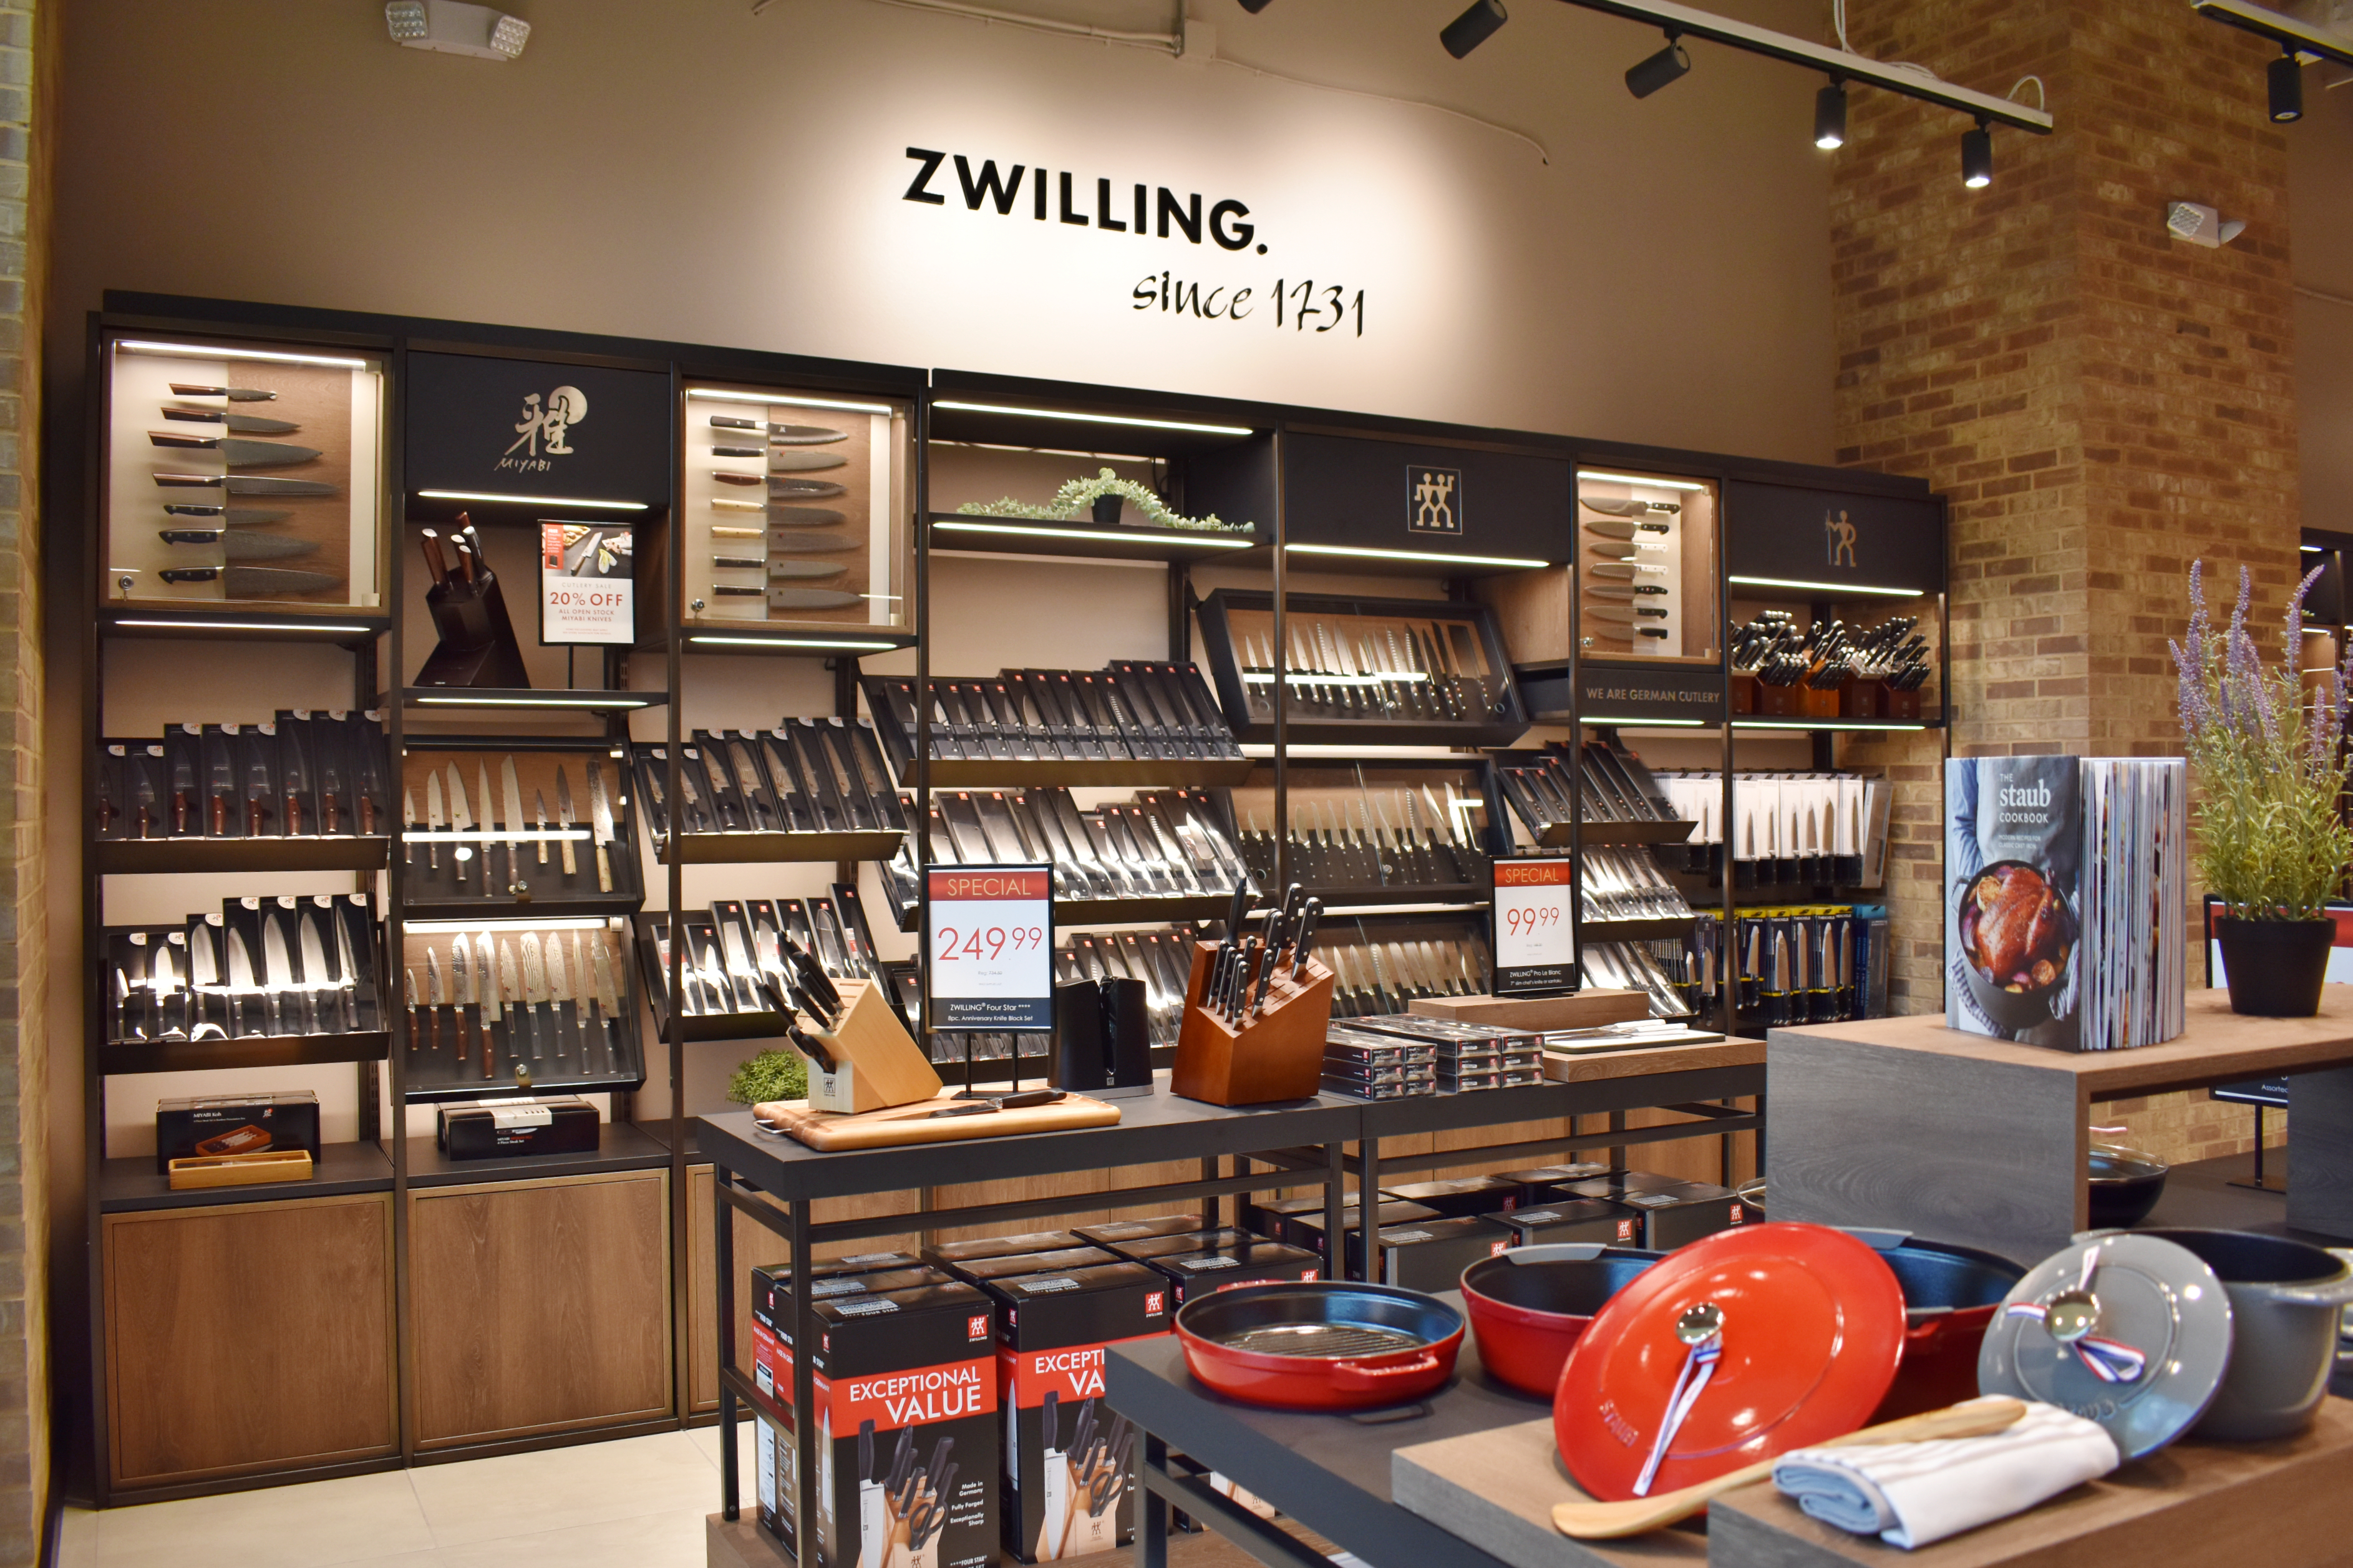 British retailer Topshop opening a Galleria store - Houston